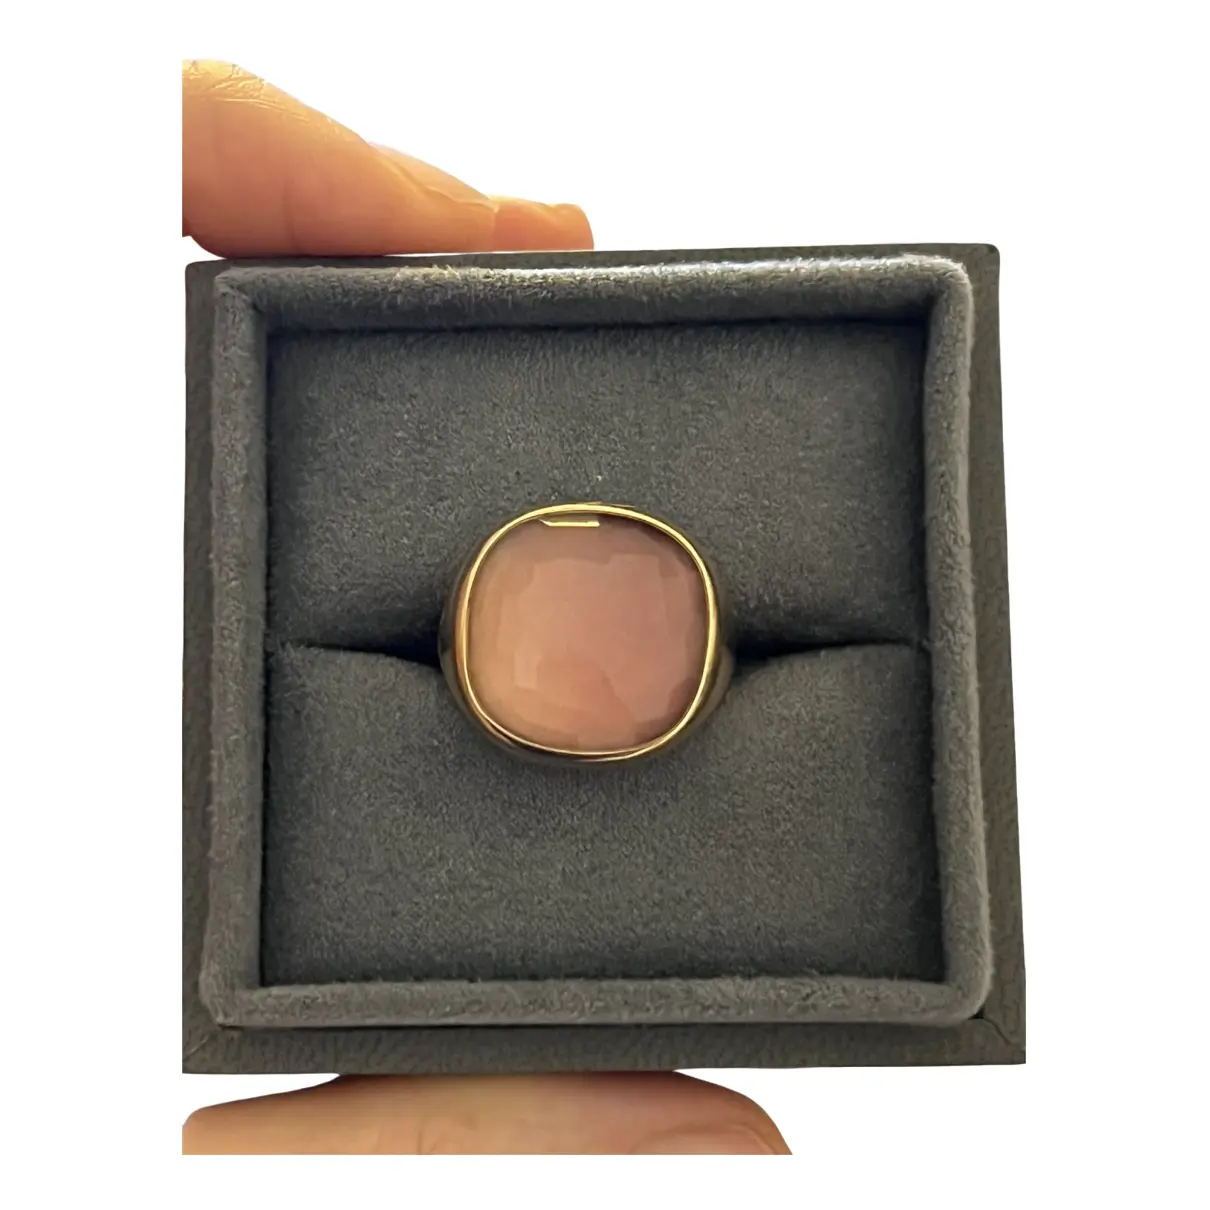 Buy Pomellato Pink gold ring online